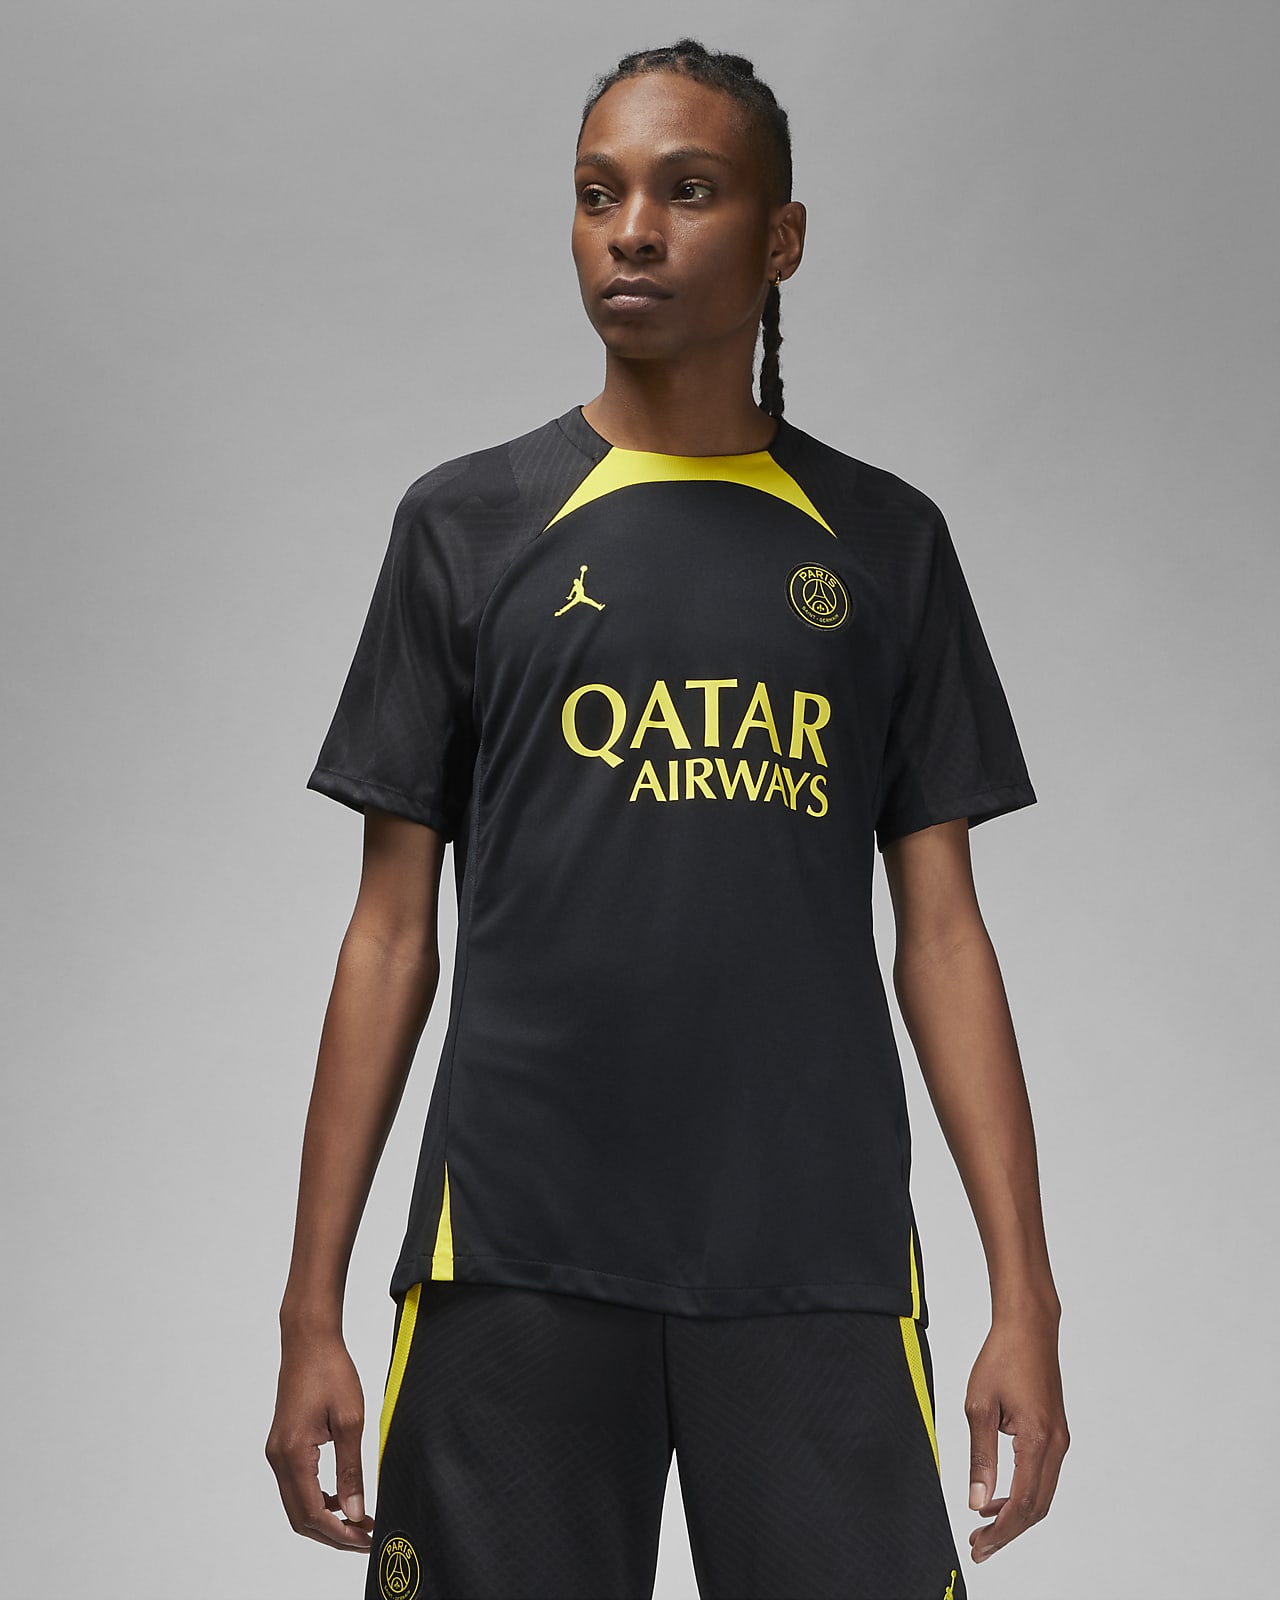 louter Landgoed geroosterd brood Paris Saint-Germain Strike Men's Jordan Dri-FIT Knit Football Top. Nike HU